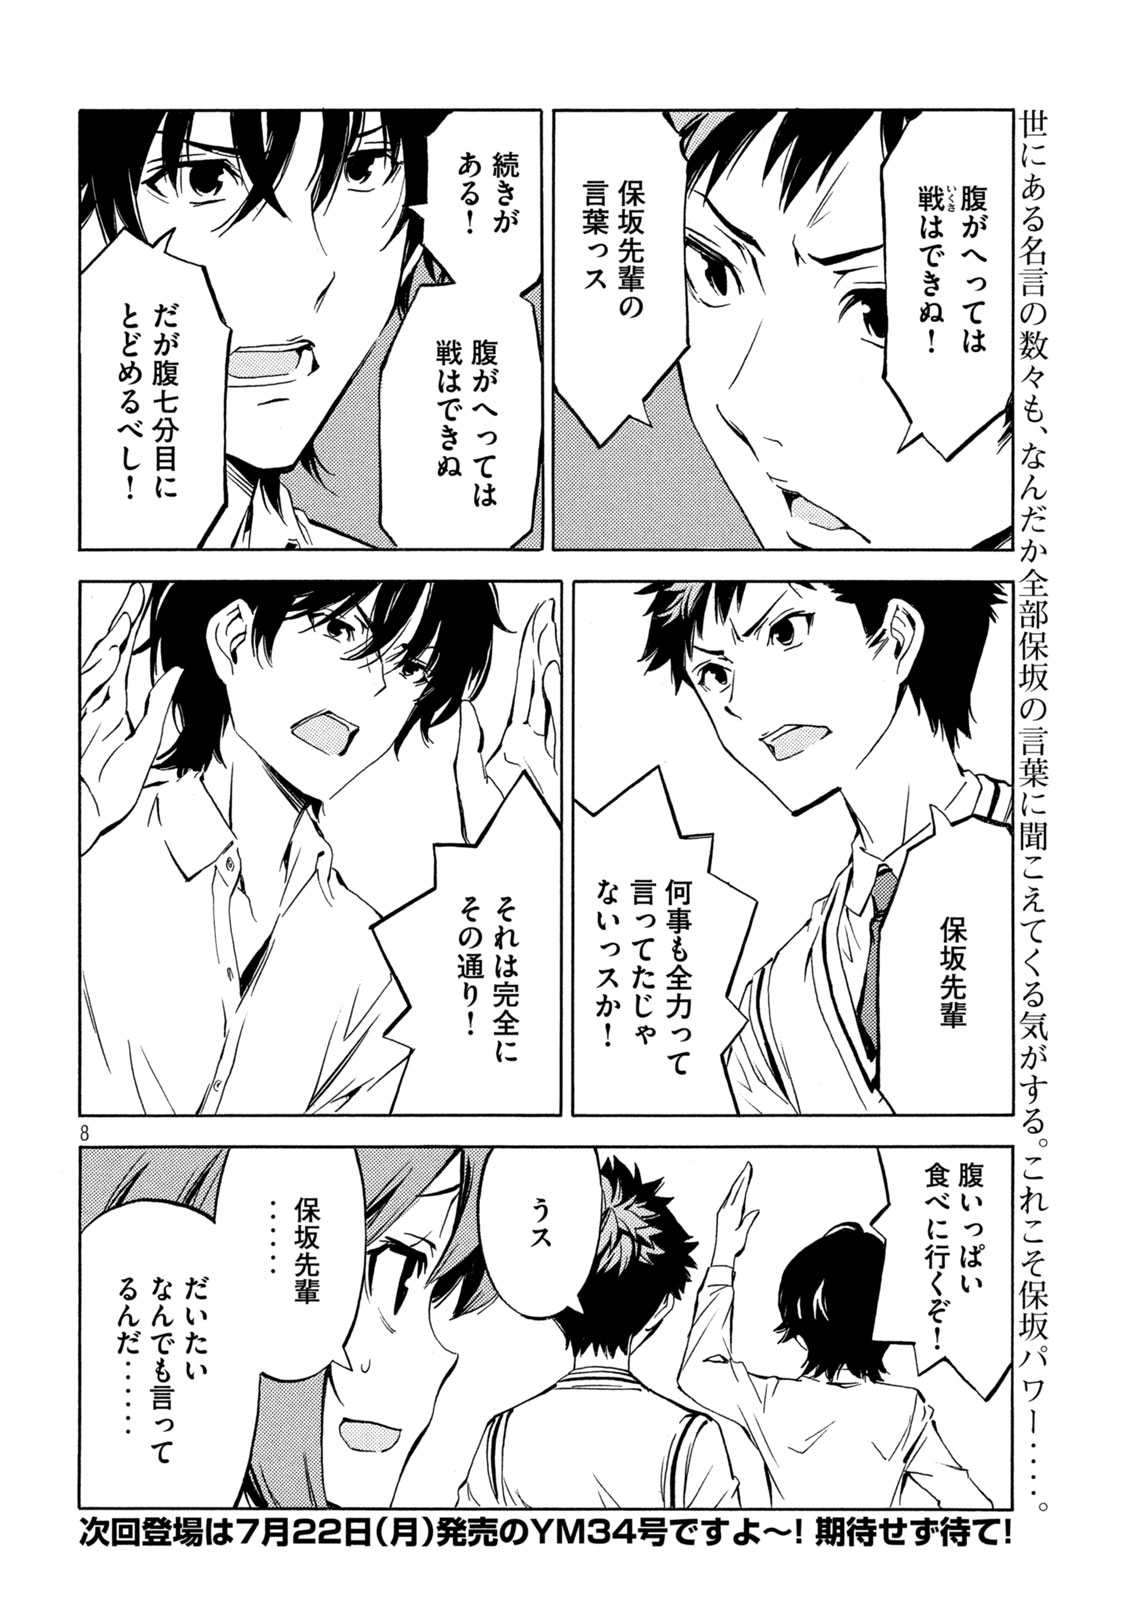 Minami-ke - Chapter 487 - Page 8